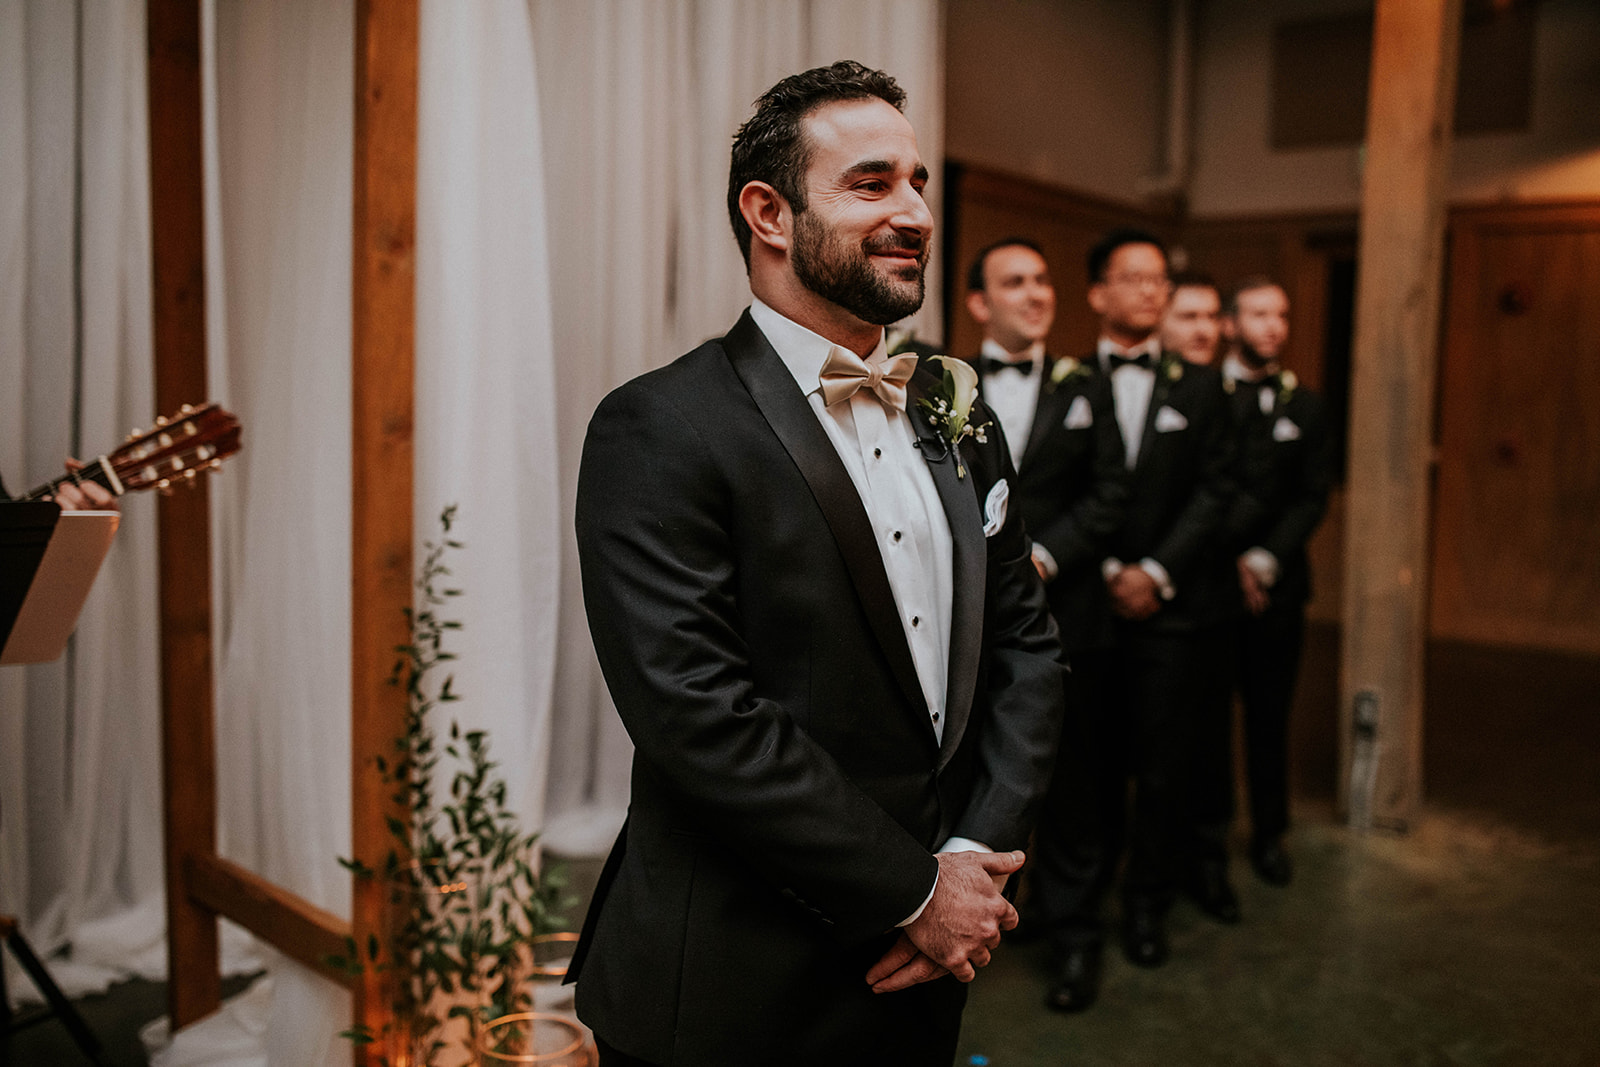 Groom smiling as bride walks down the aisle